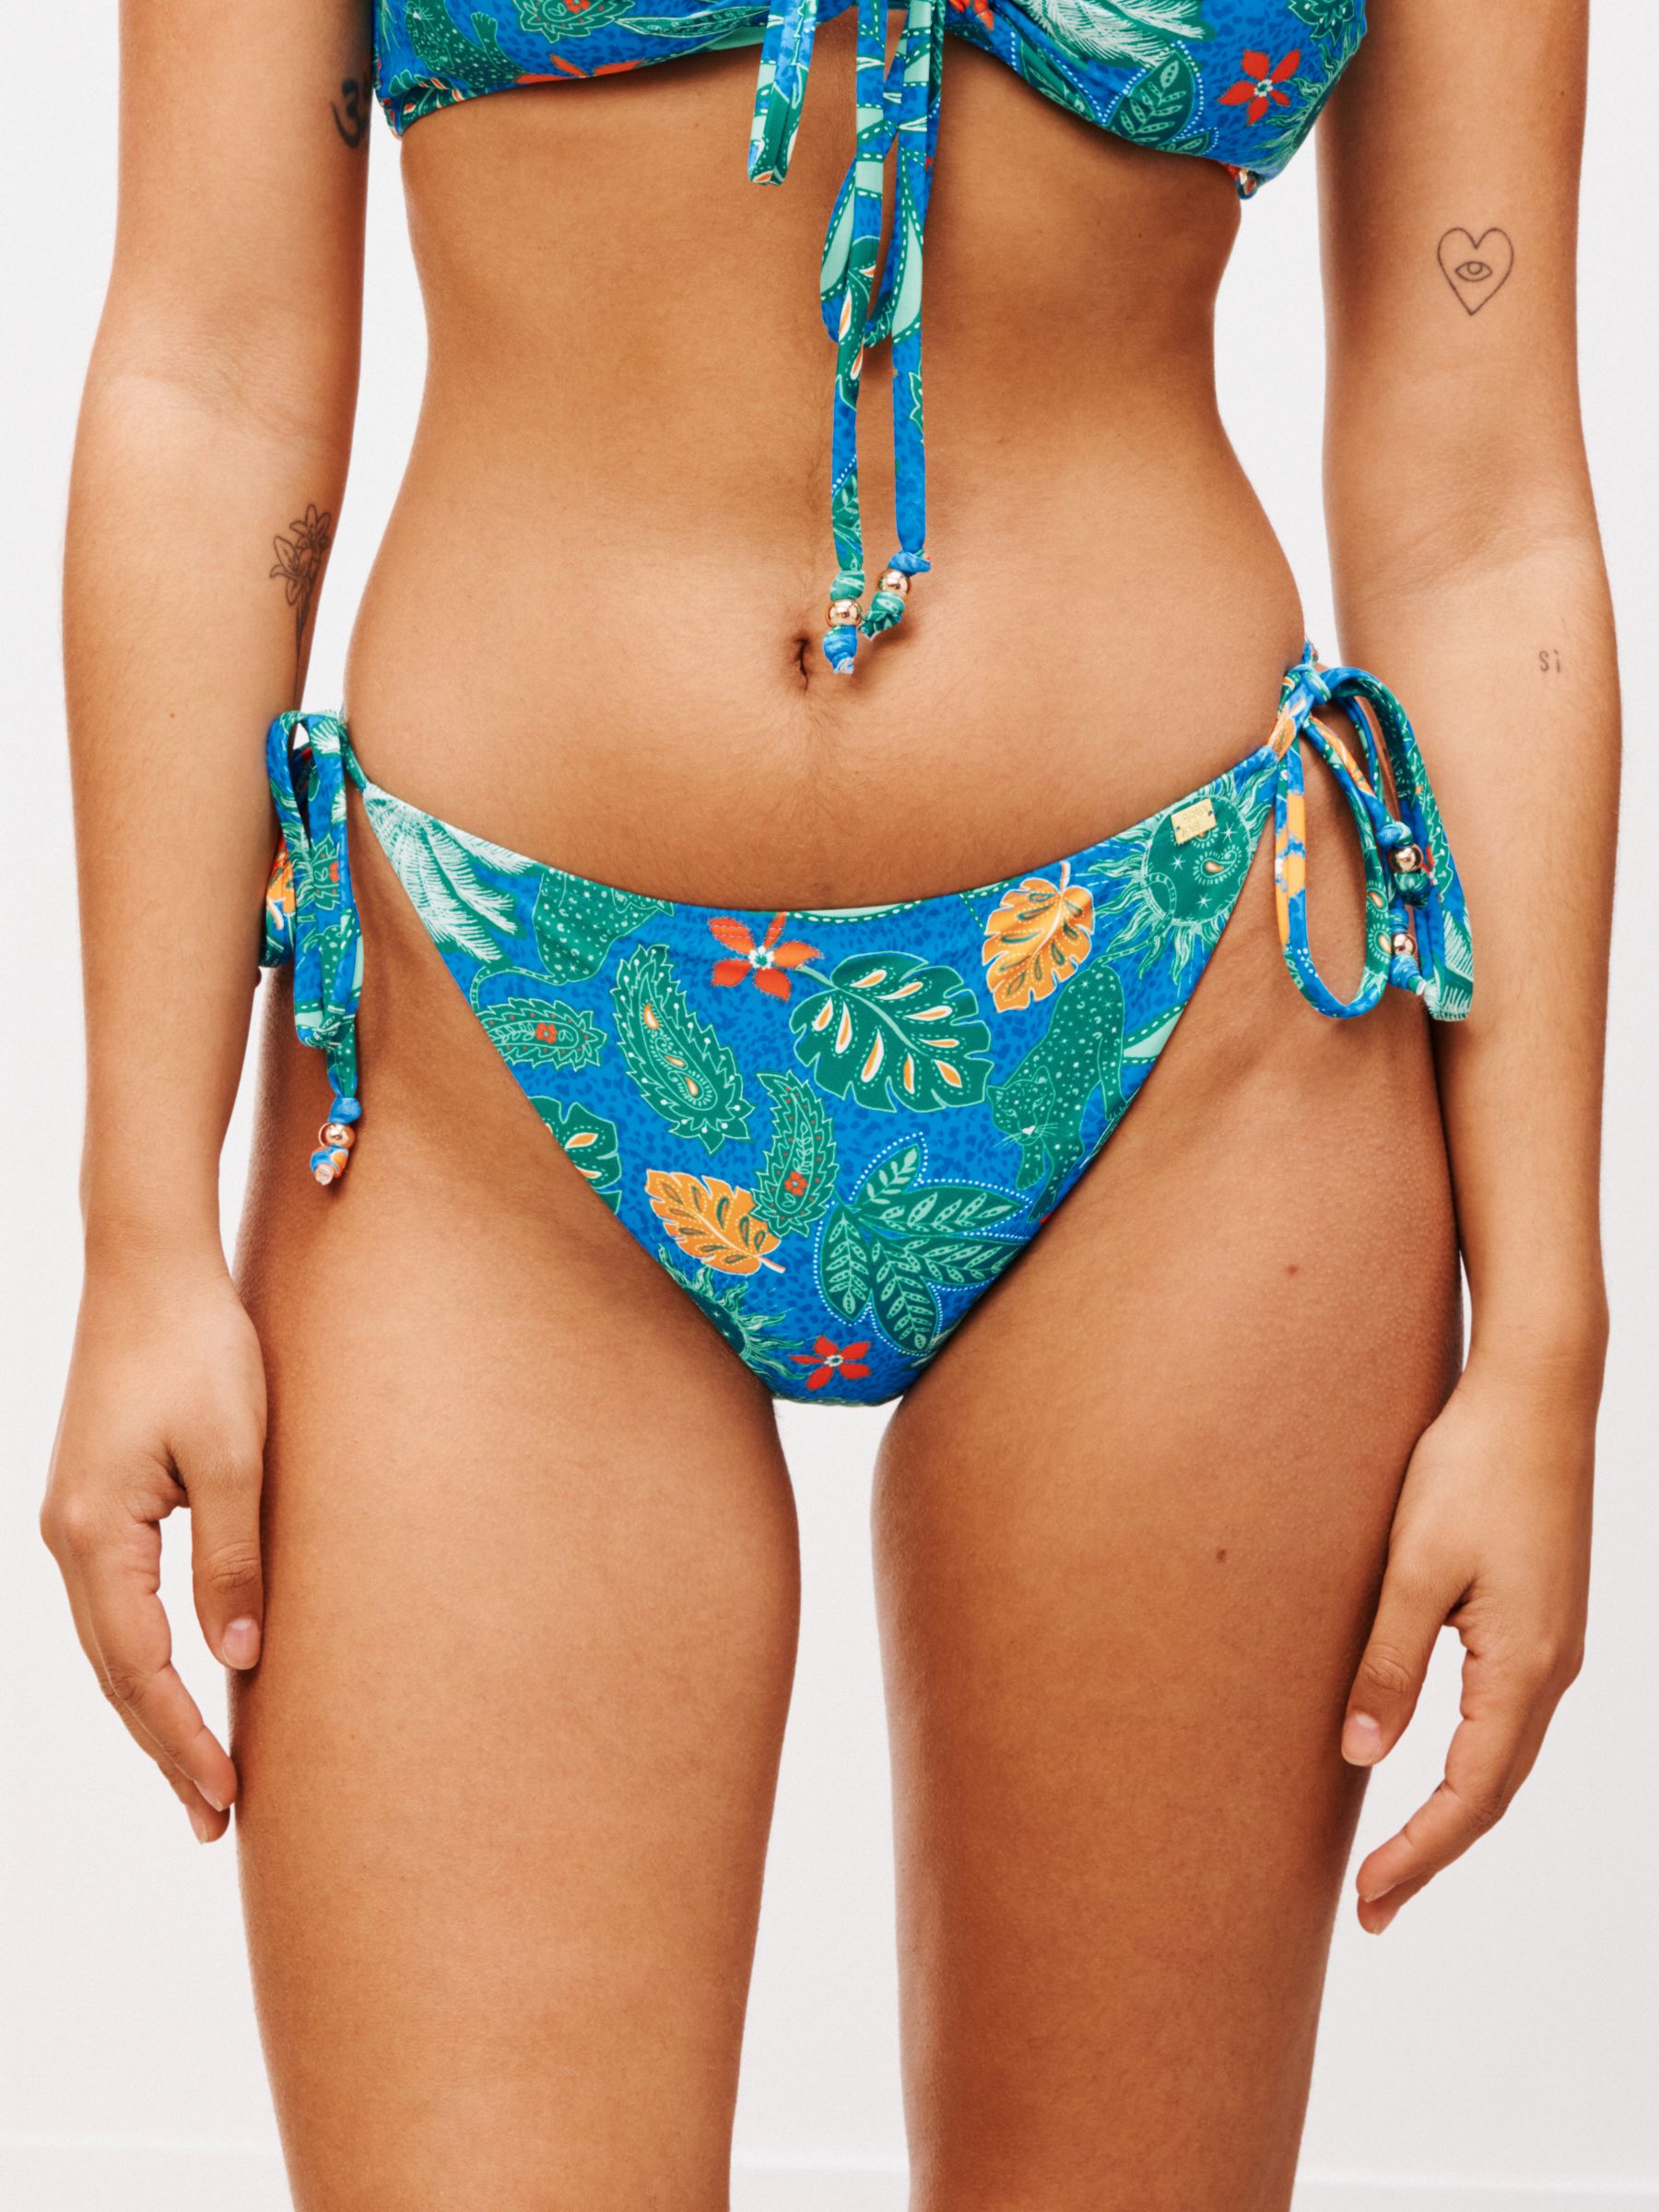 Roxy Check it 2 Moderate - Bikini bottom Women's, Buy online